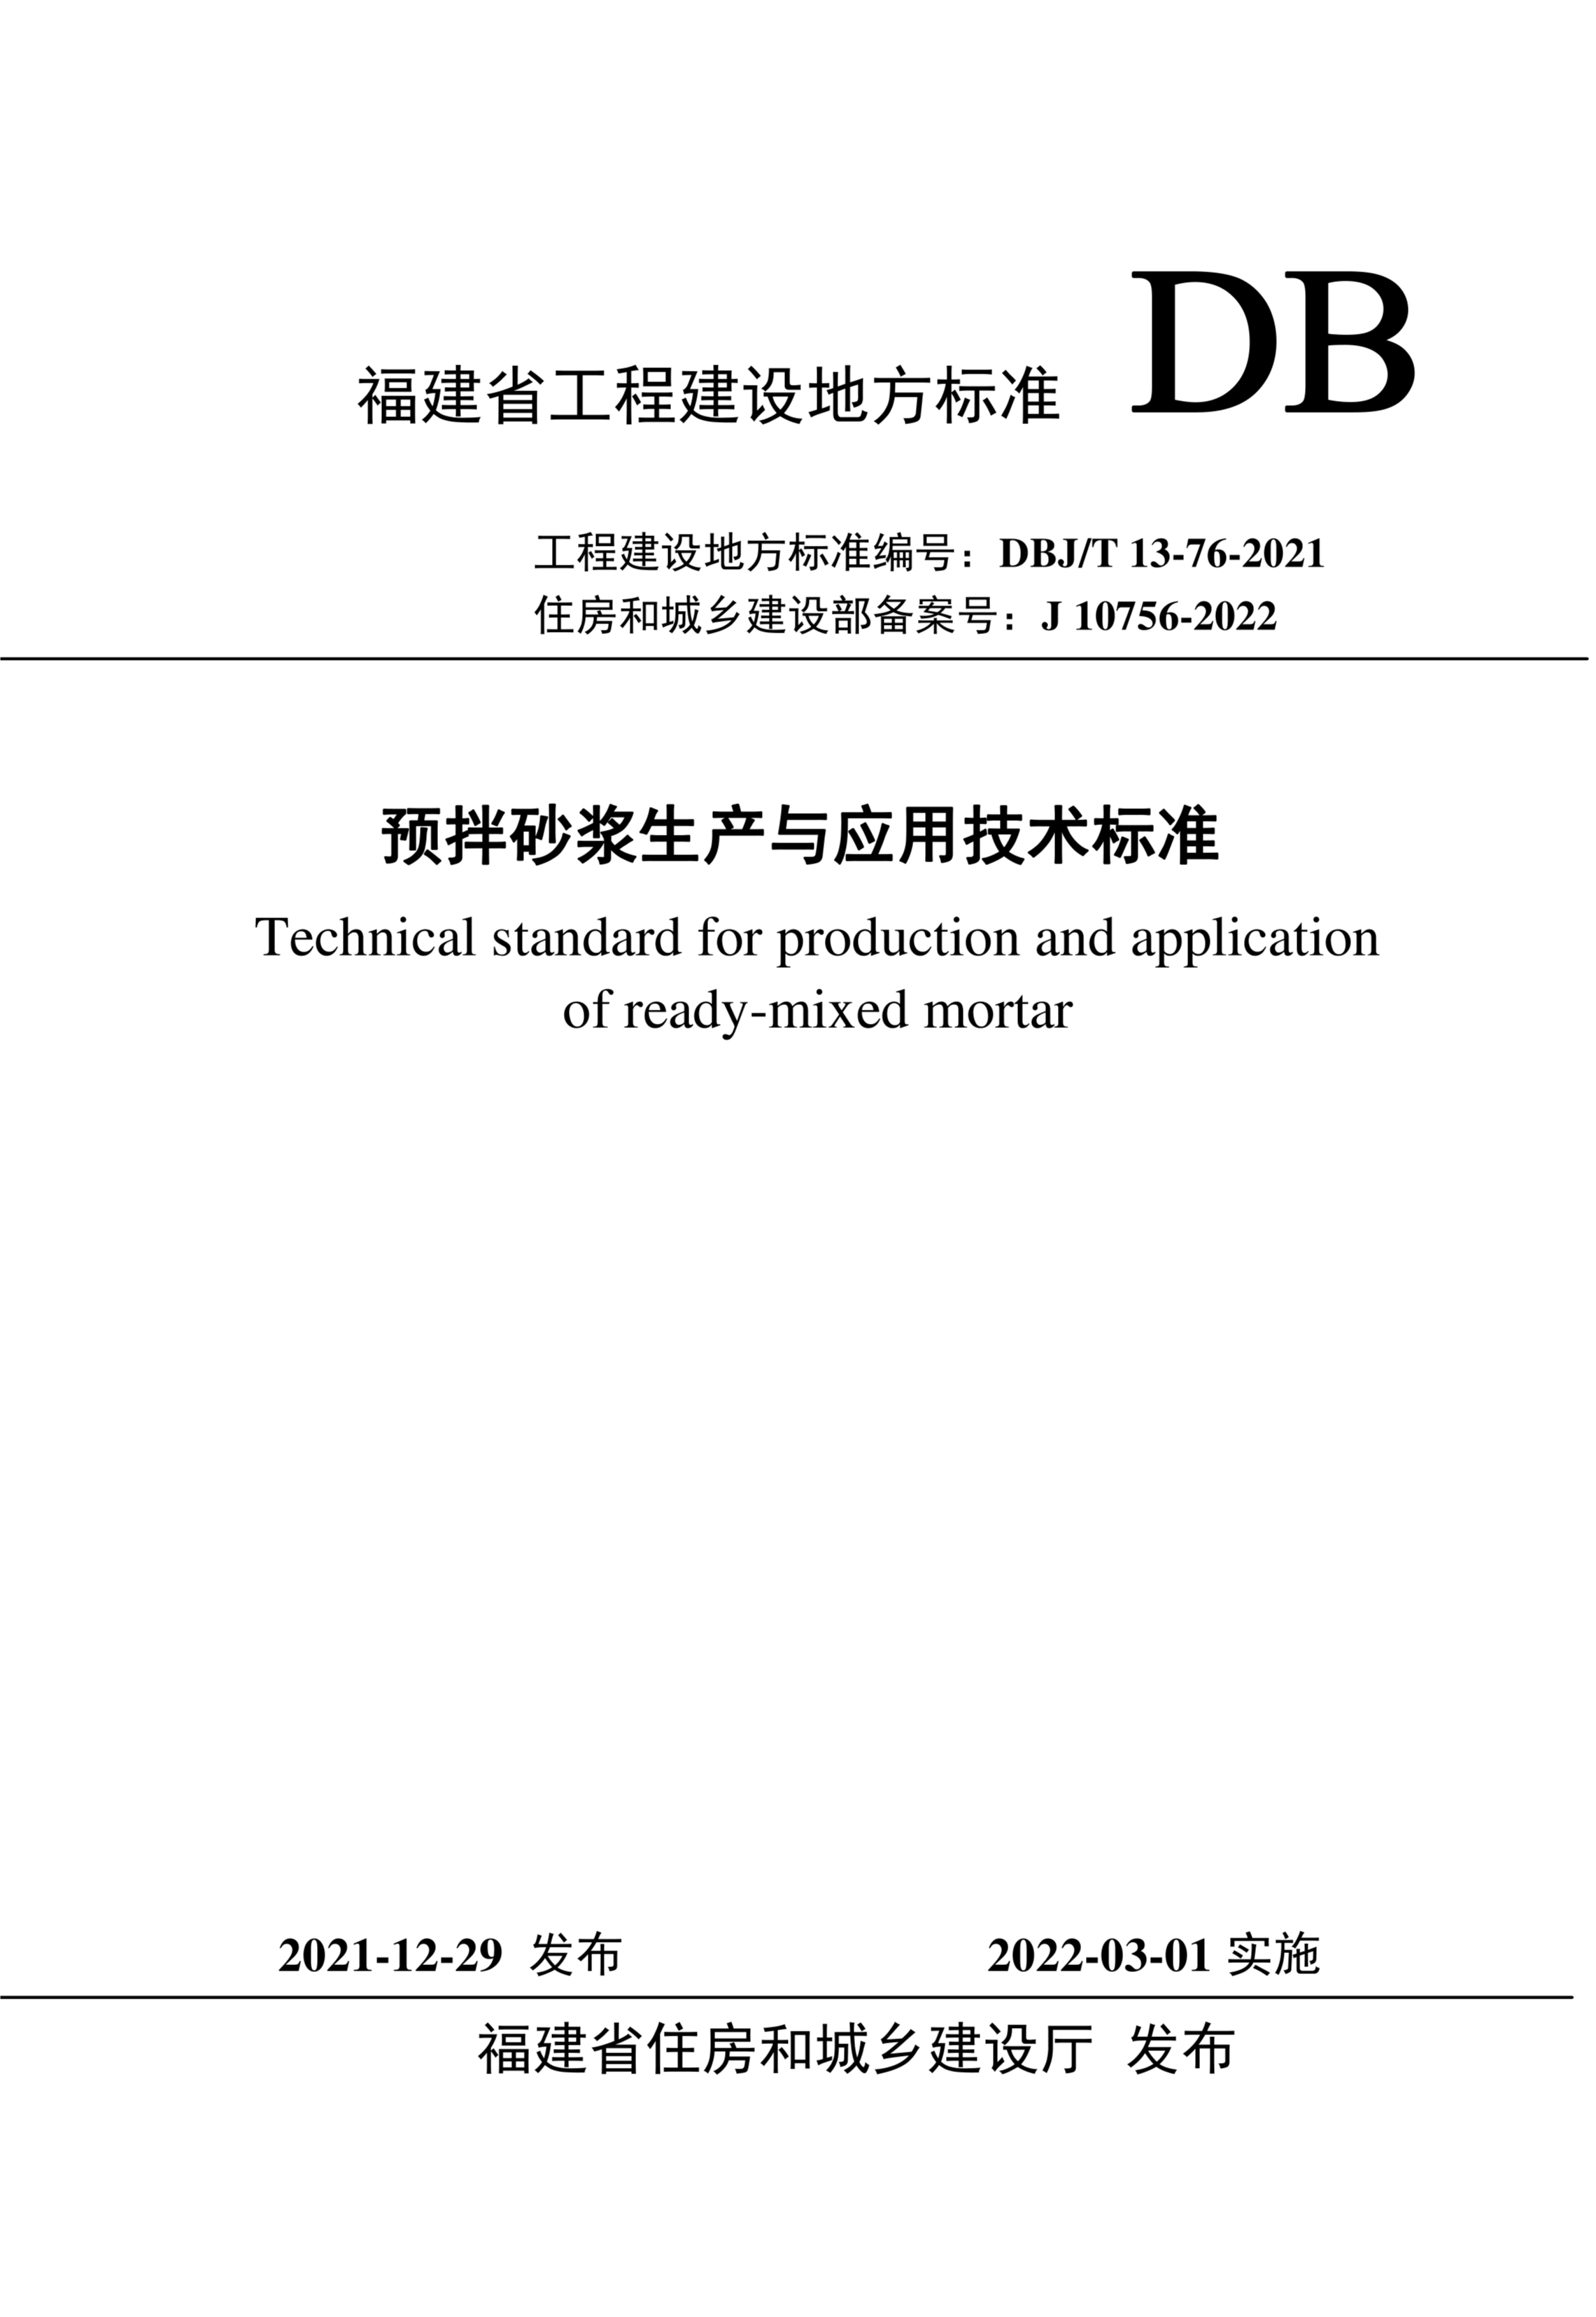 DBJ/T 13-76-2021 福建省预拌砂浆生产与应用技术规程